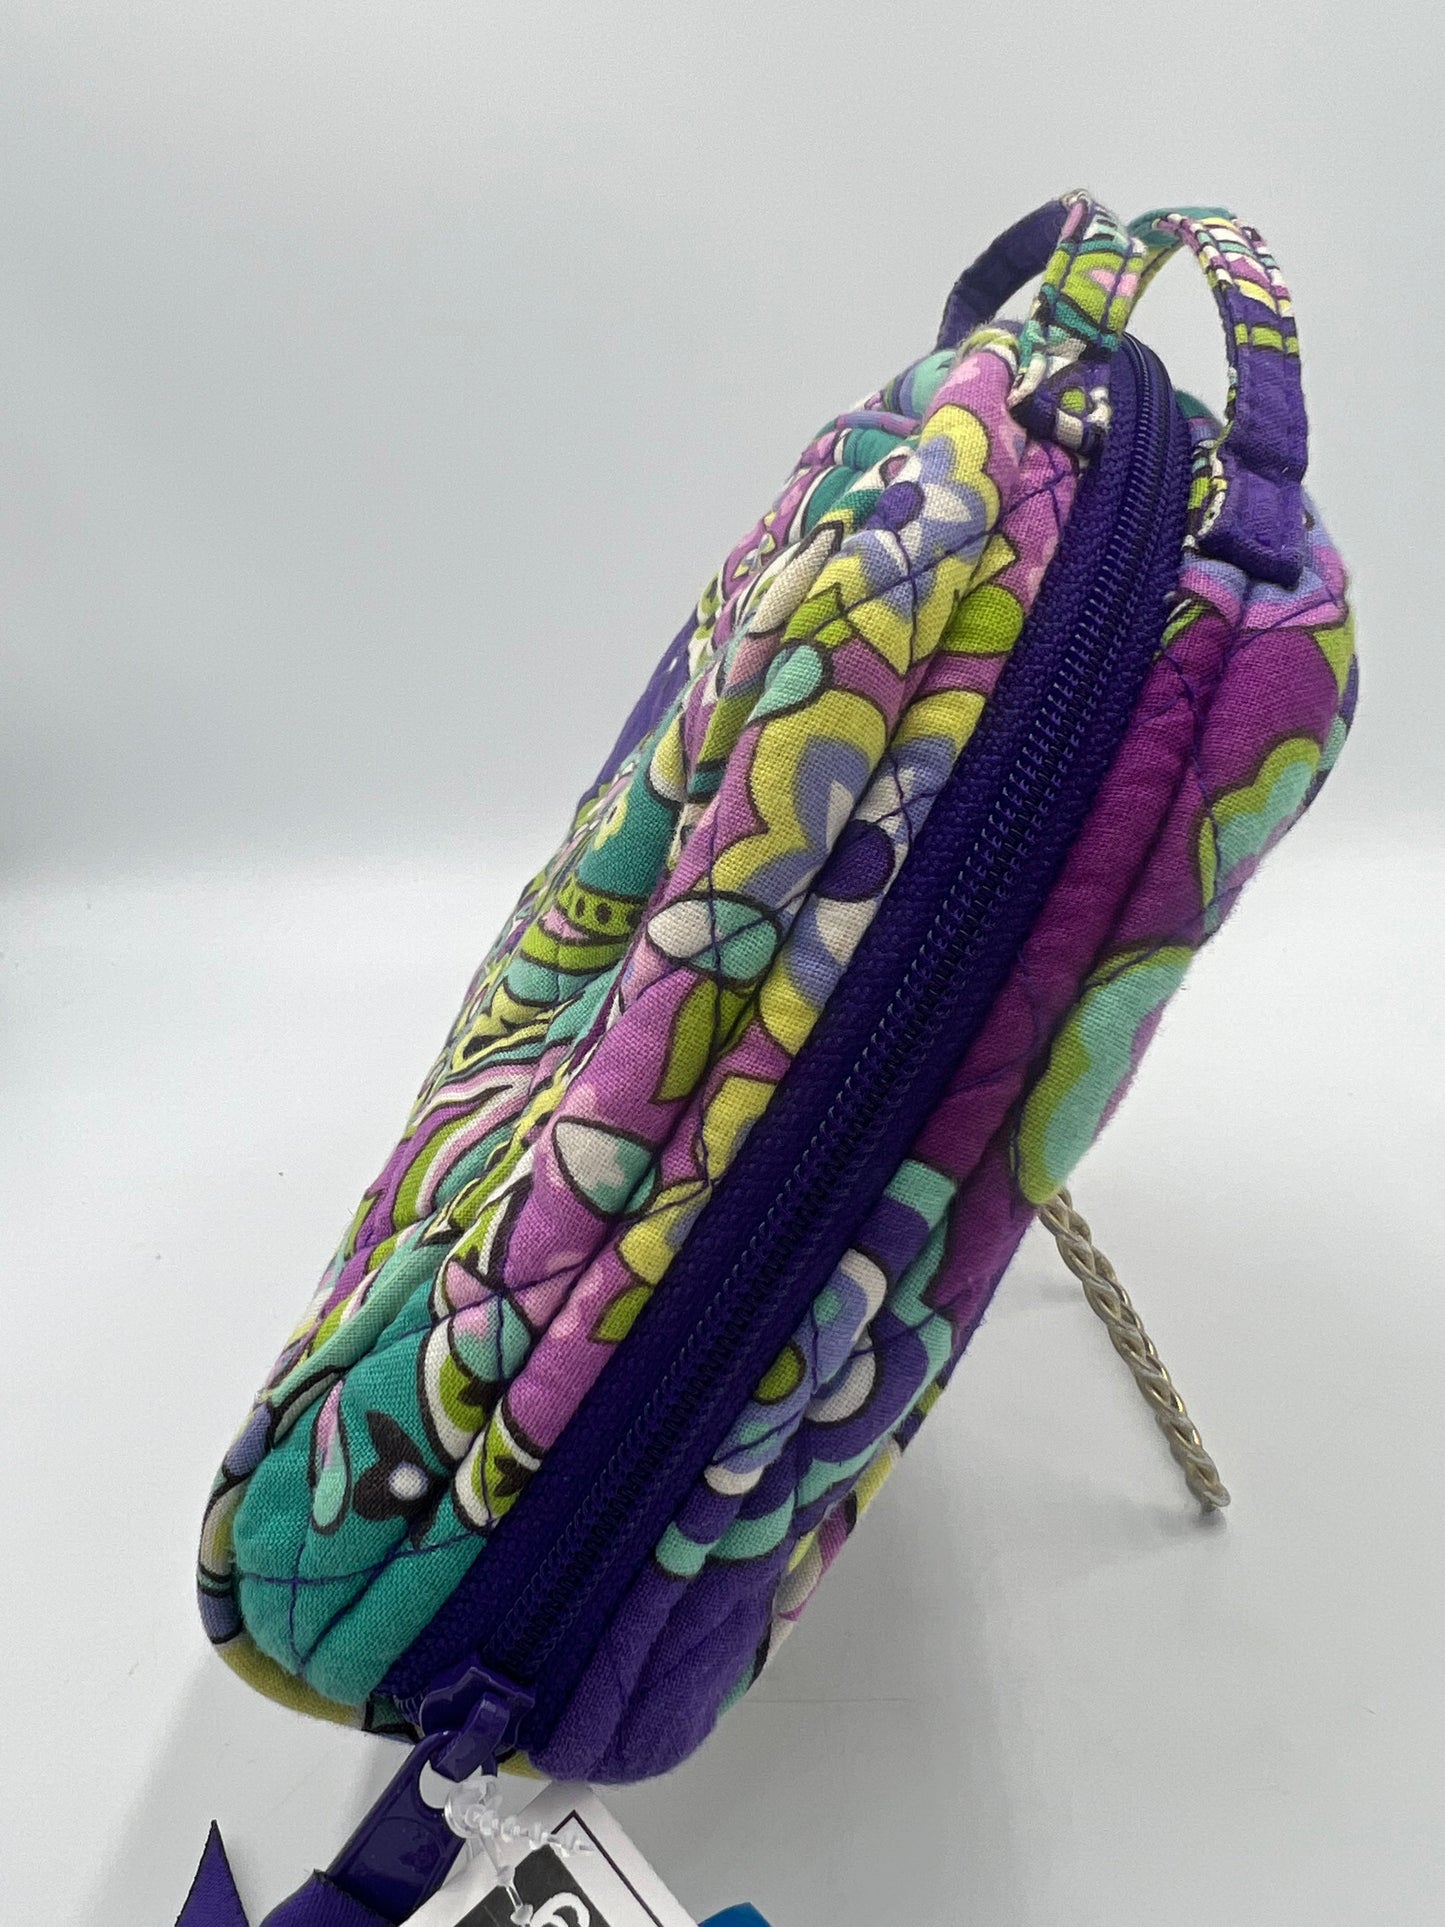 Purple Makeup Bag BY Vera Bradley